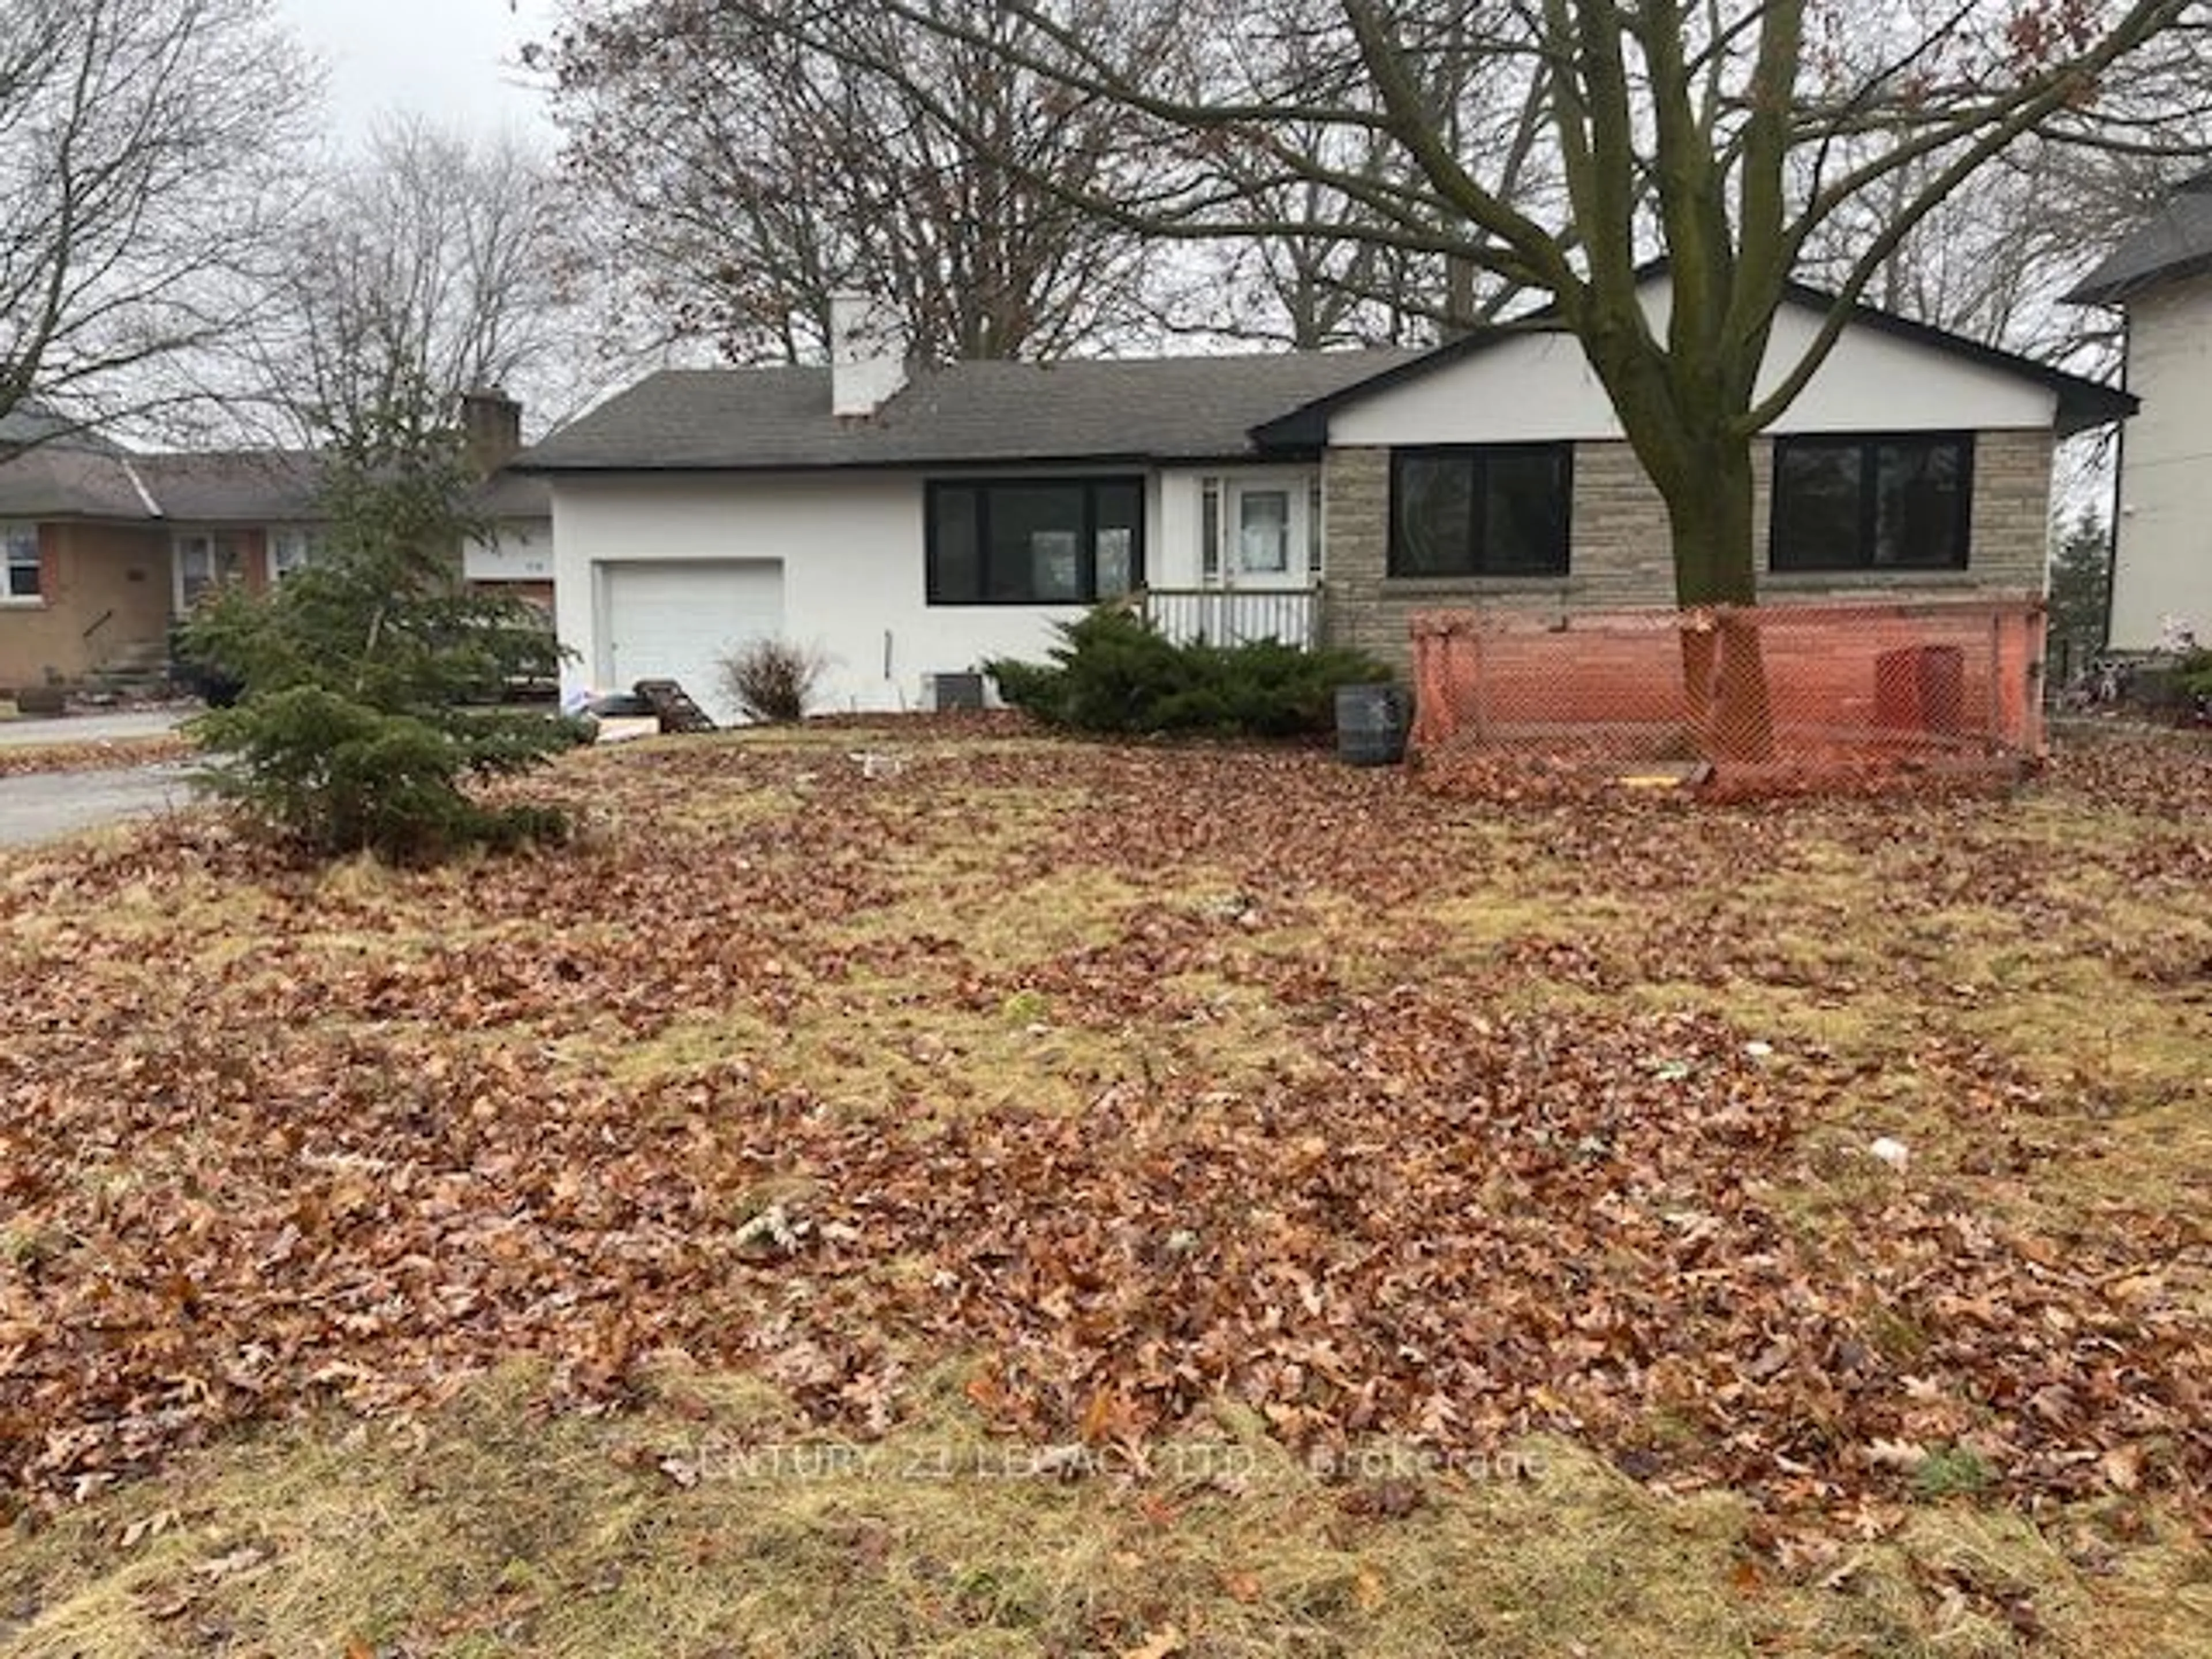 Frontside or backside of a home for 522 Pineland Ave, Oakville Ontario L6K 2A1